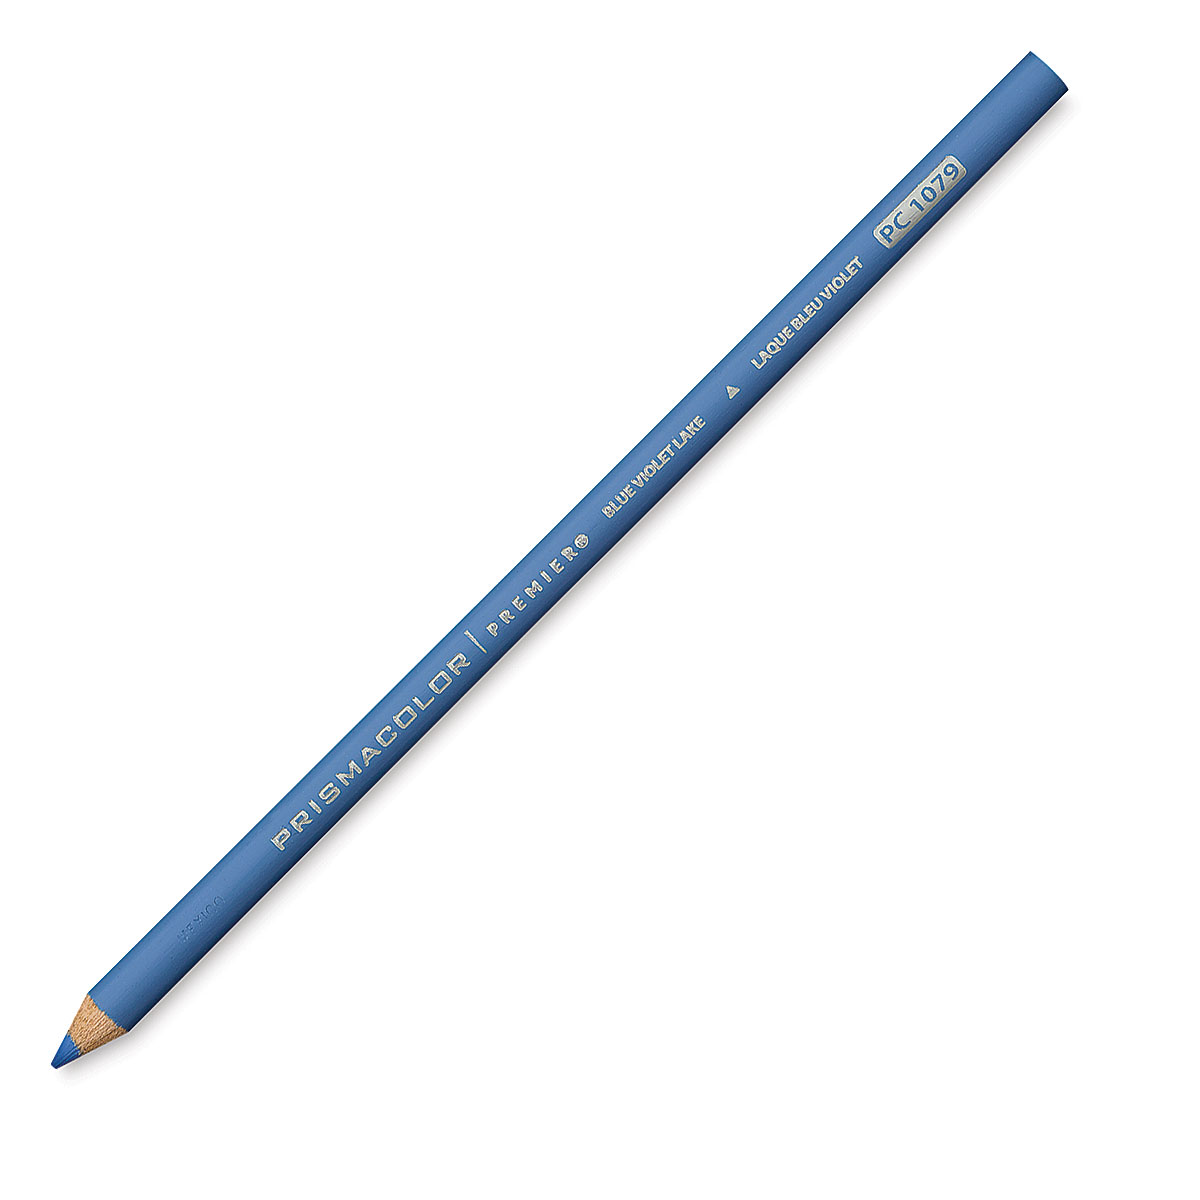 Prismacolor Premier Colored Pencil Colorless Blender